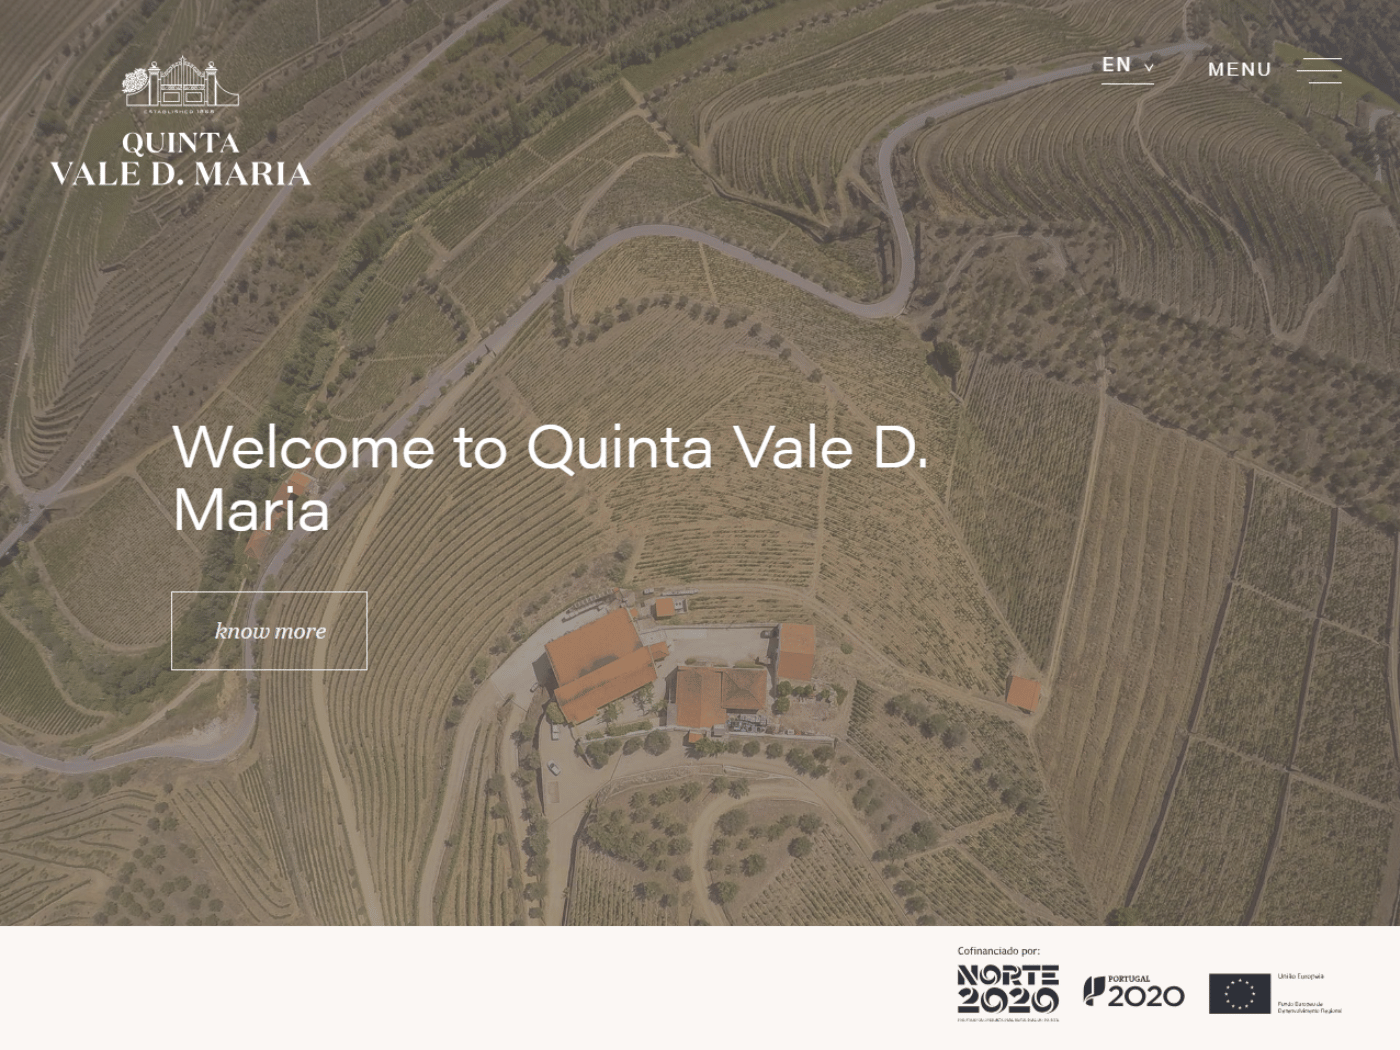 Quinta Vale Dona Maria sites gallery css design awards winner